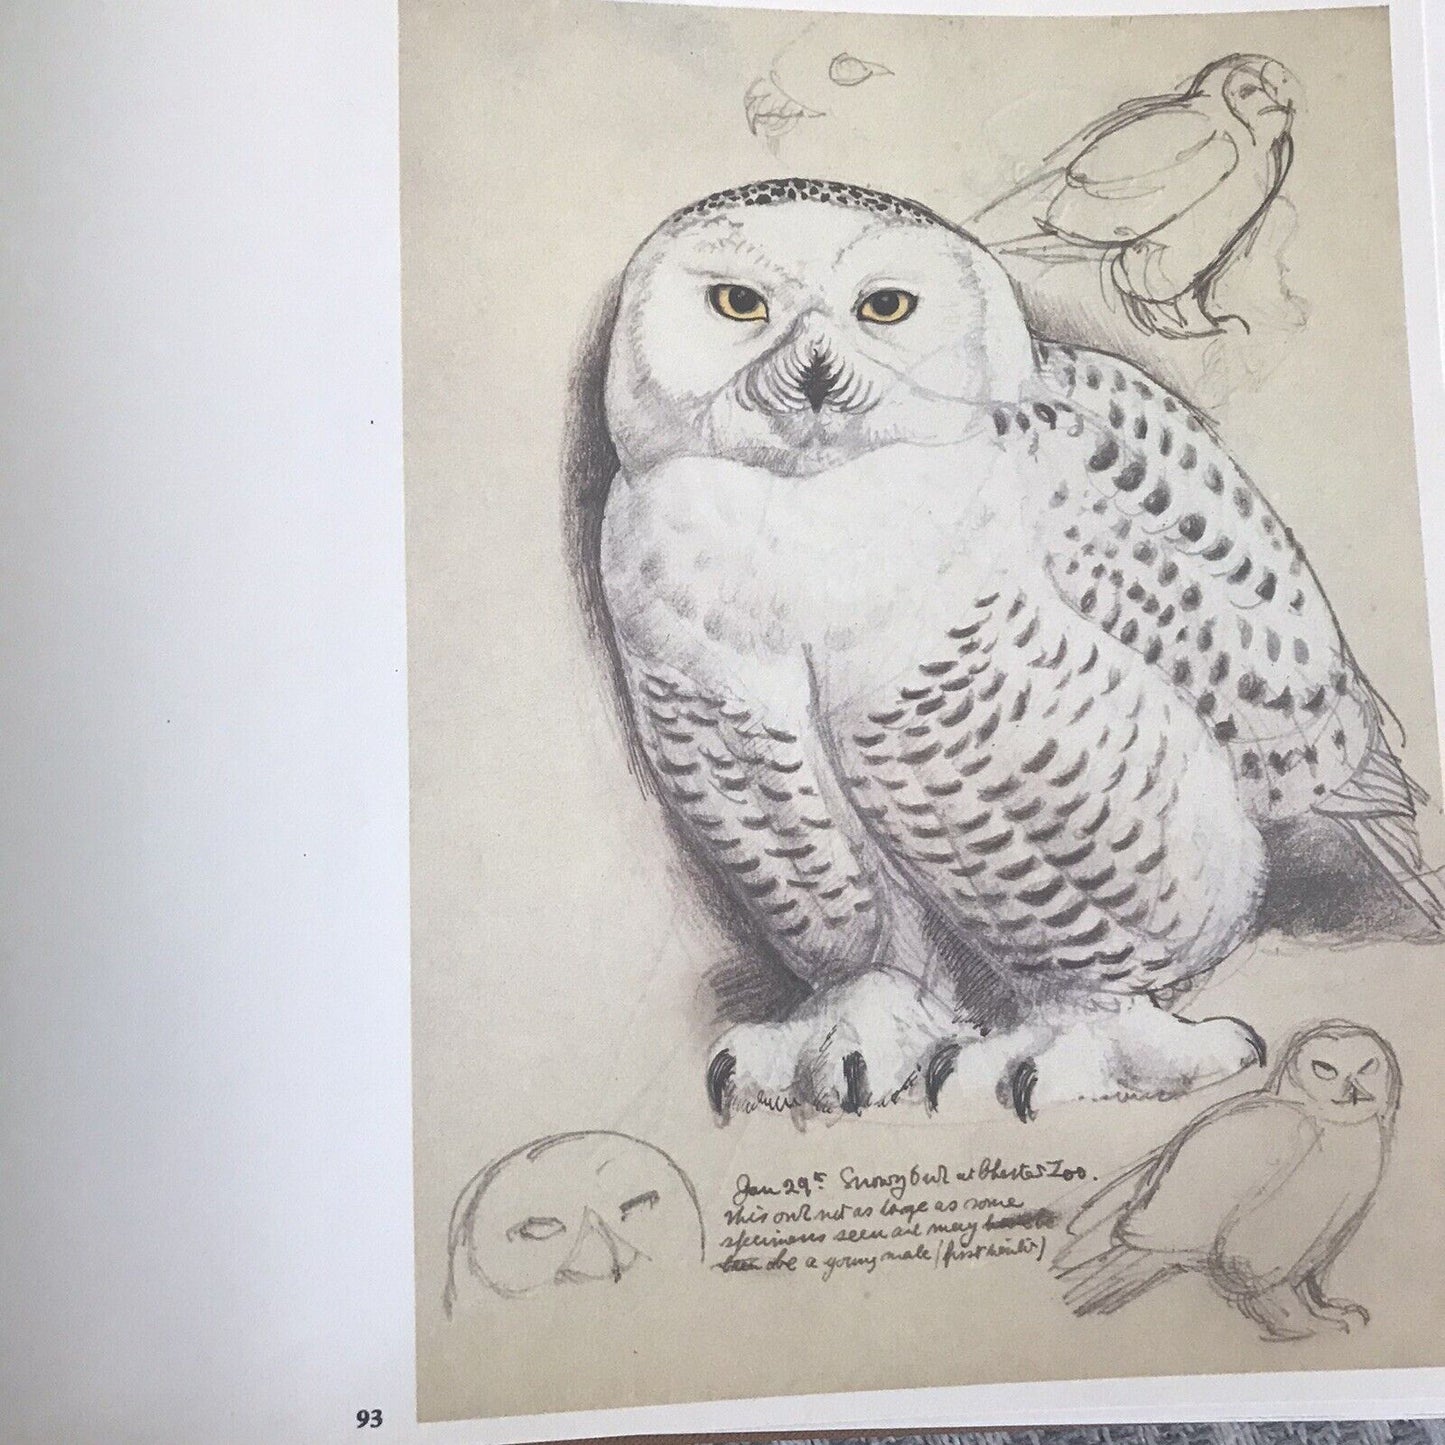 1979 C.F. Tunnicliffe A Sketchbook Of Birds(Ian Niall) Book Club